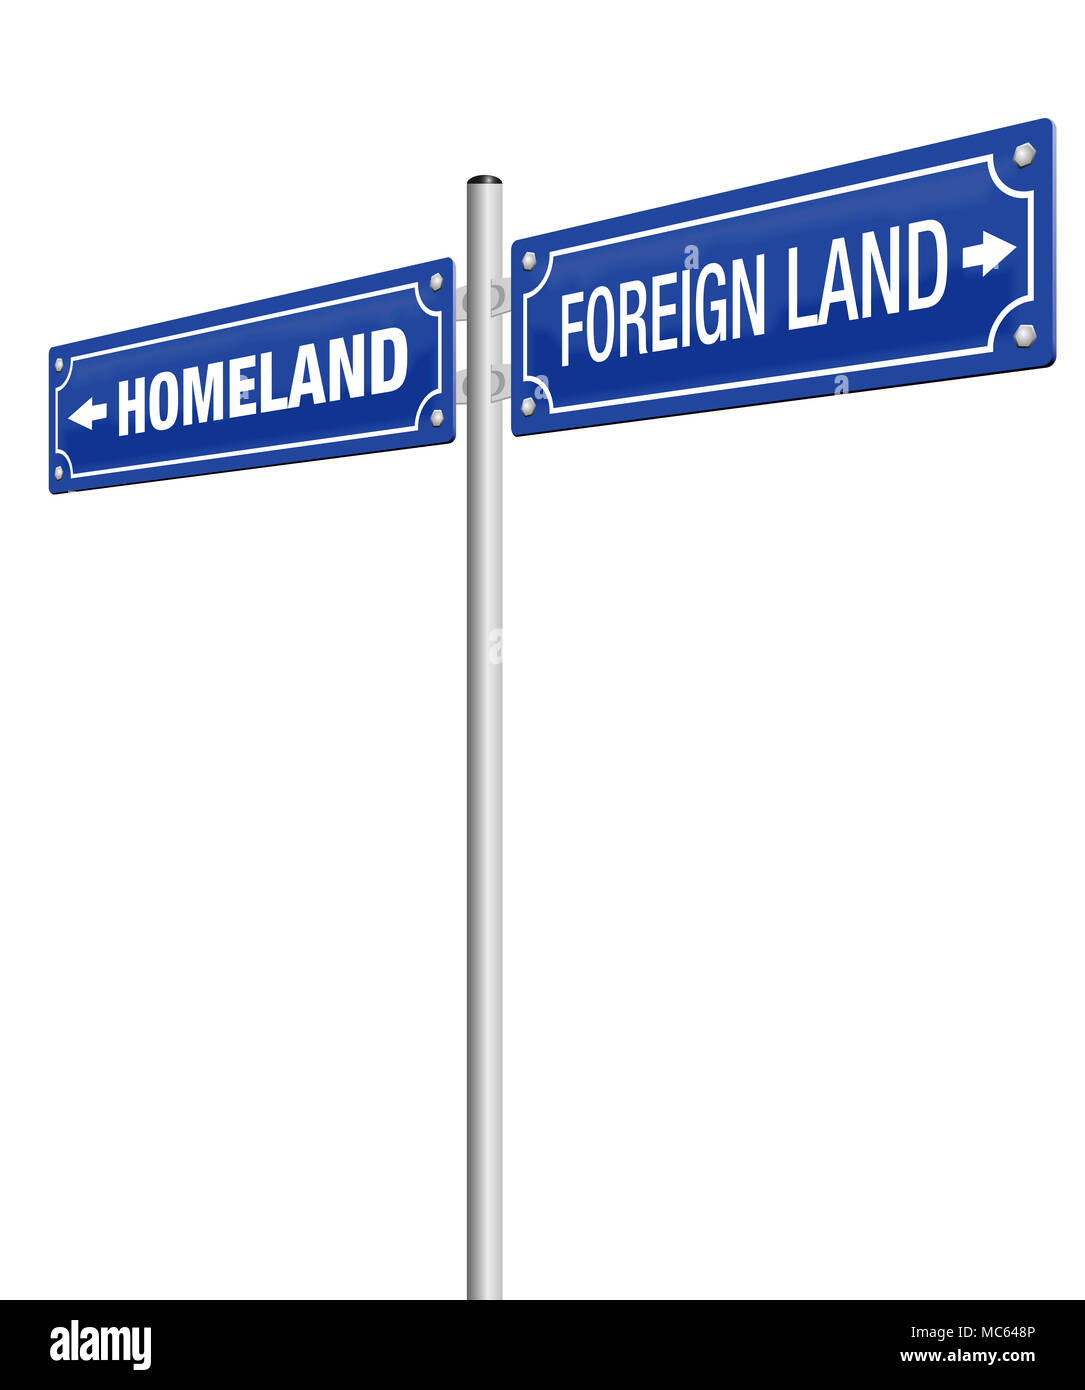 FOREIGN LAND and HOMELAND, written on two signposts. Symbol for homesickness, emigration, flight, expulsion, banishment, exile, exodus. Stock Photo